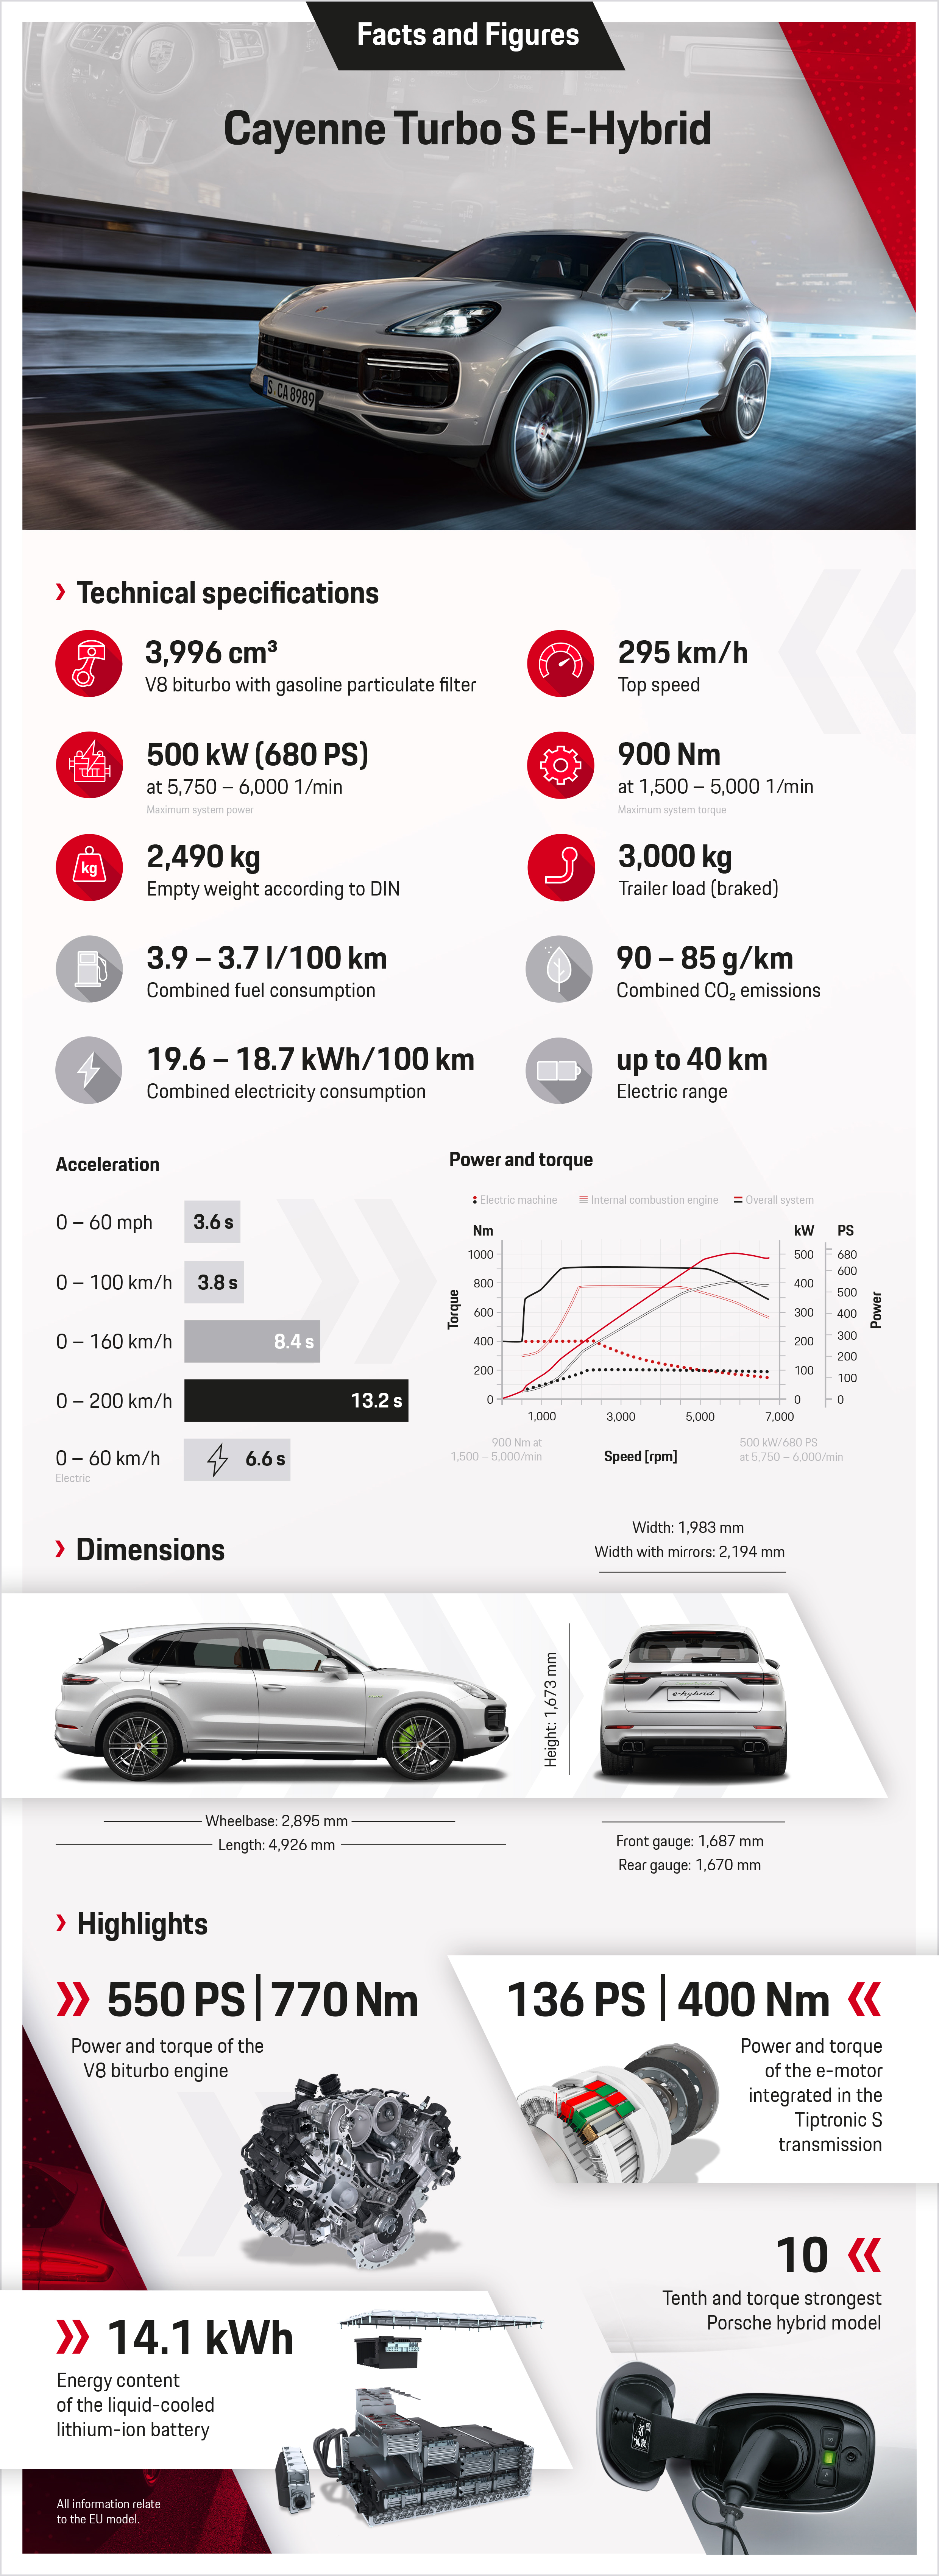 Cayenne Turbo S E-Hybrid, infographic, 2019, Porsche AG